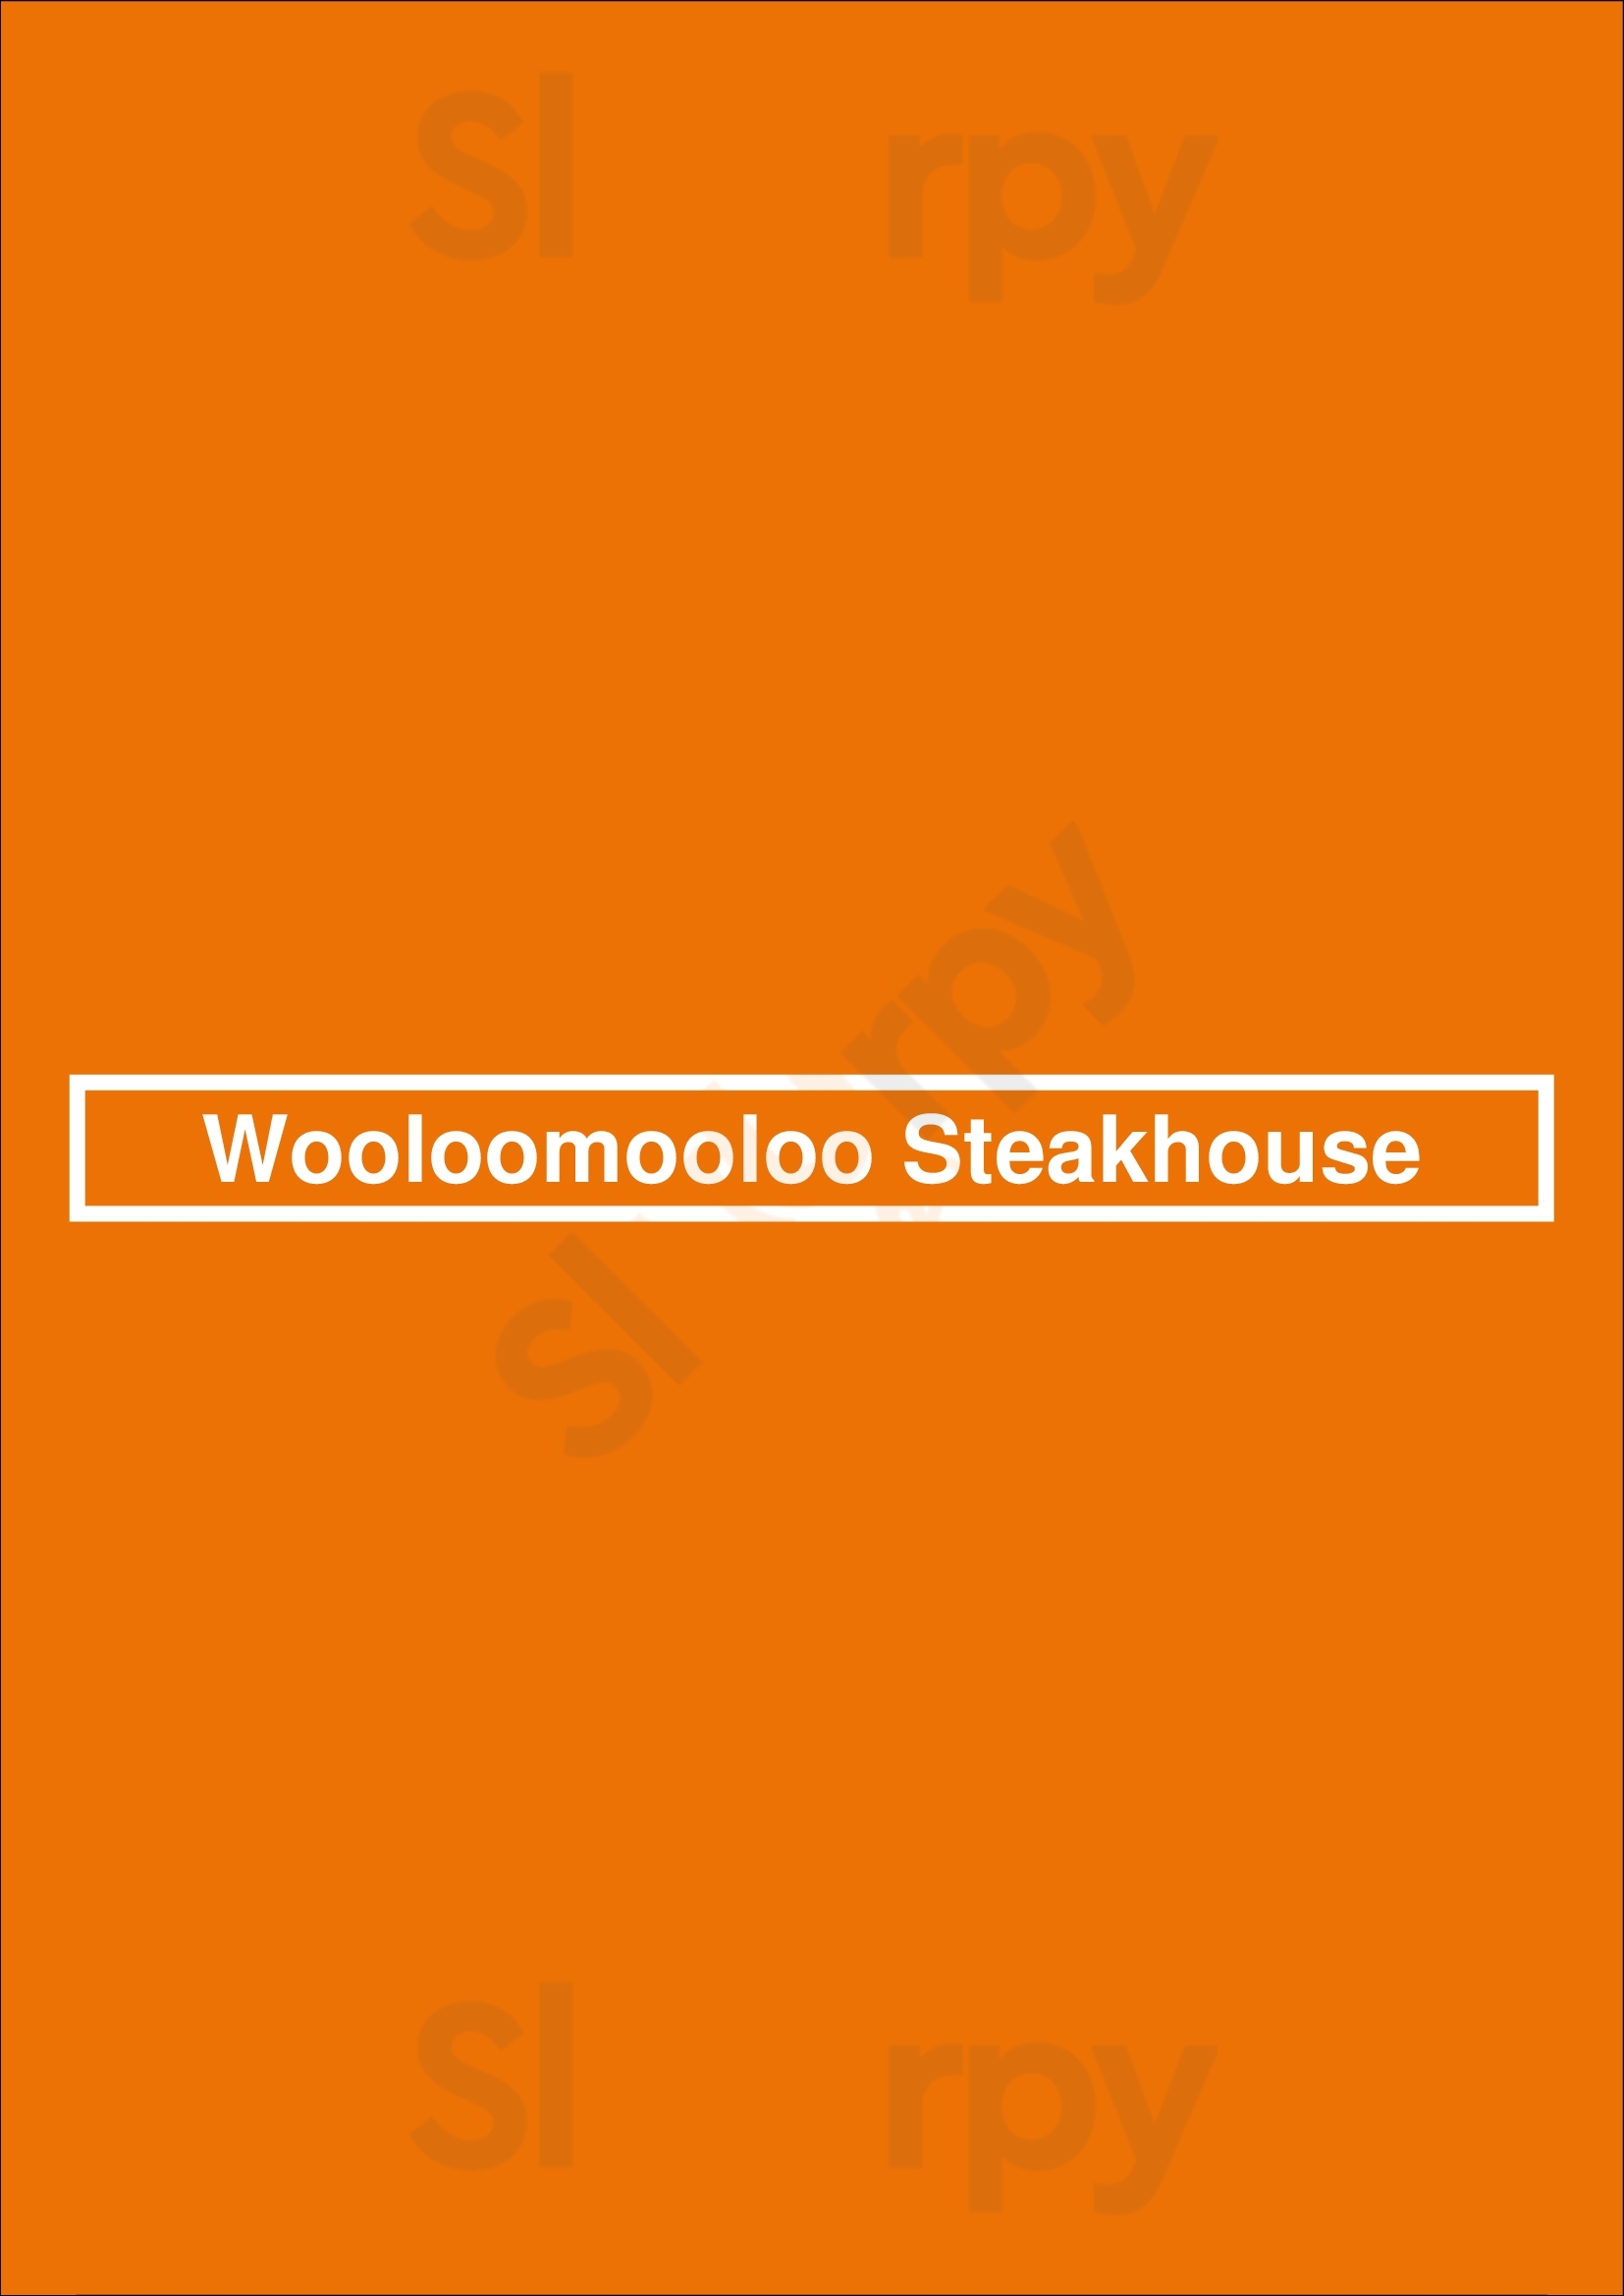 Wooloomooloo Steakhouse Singapore Menu - 1